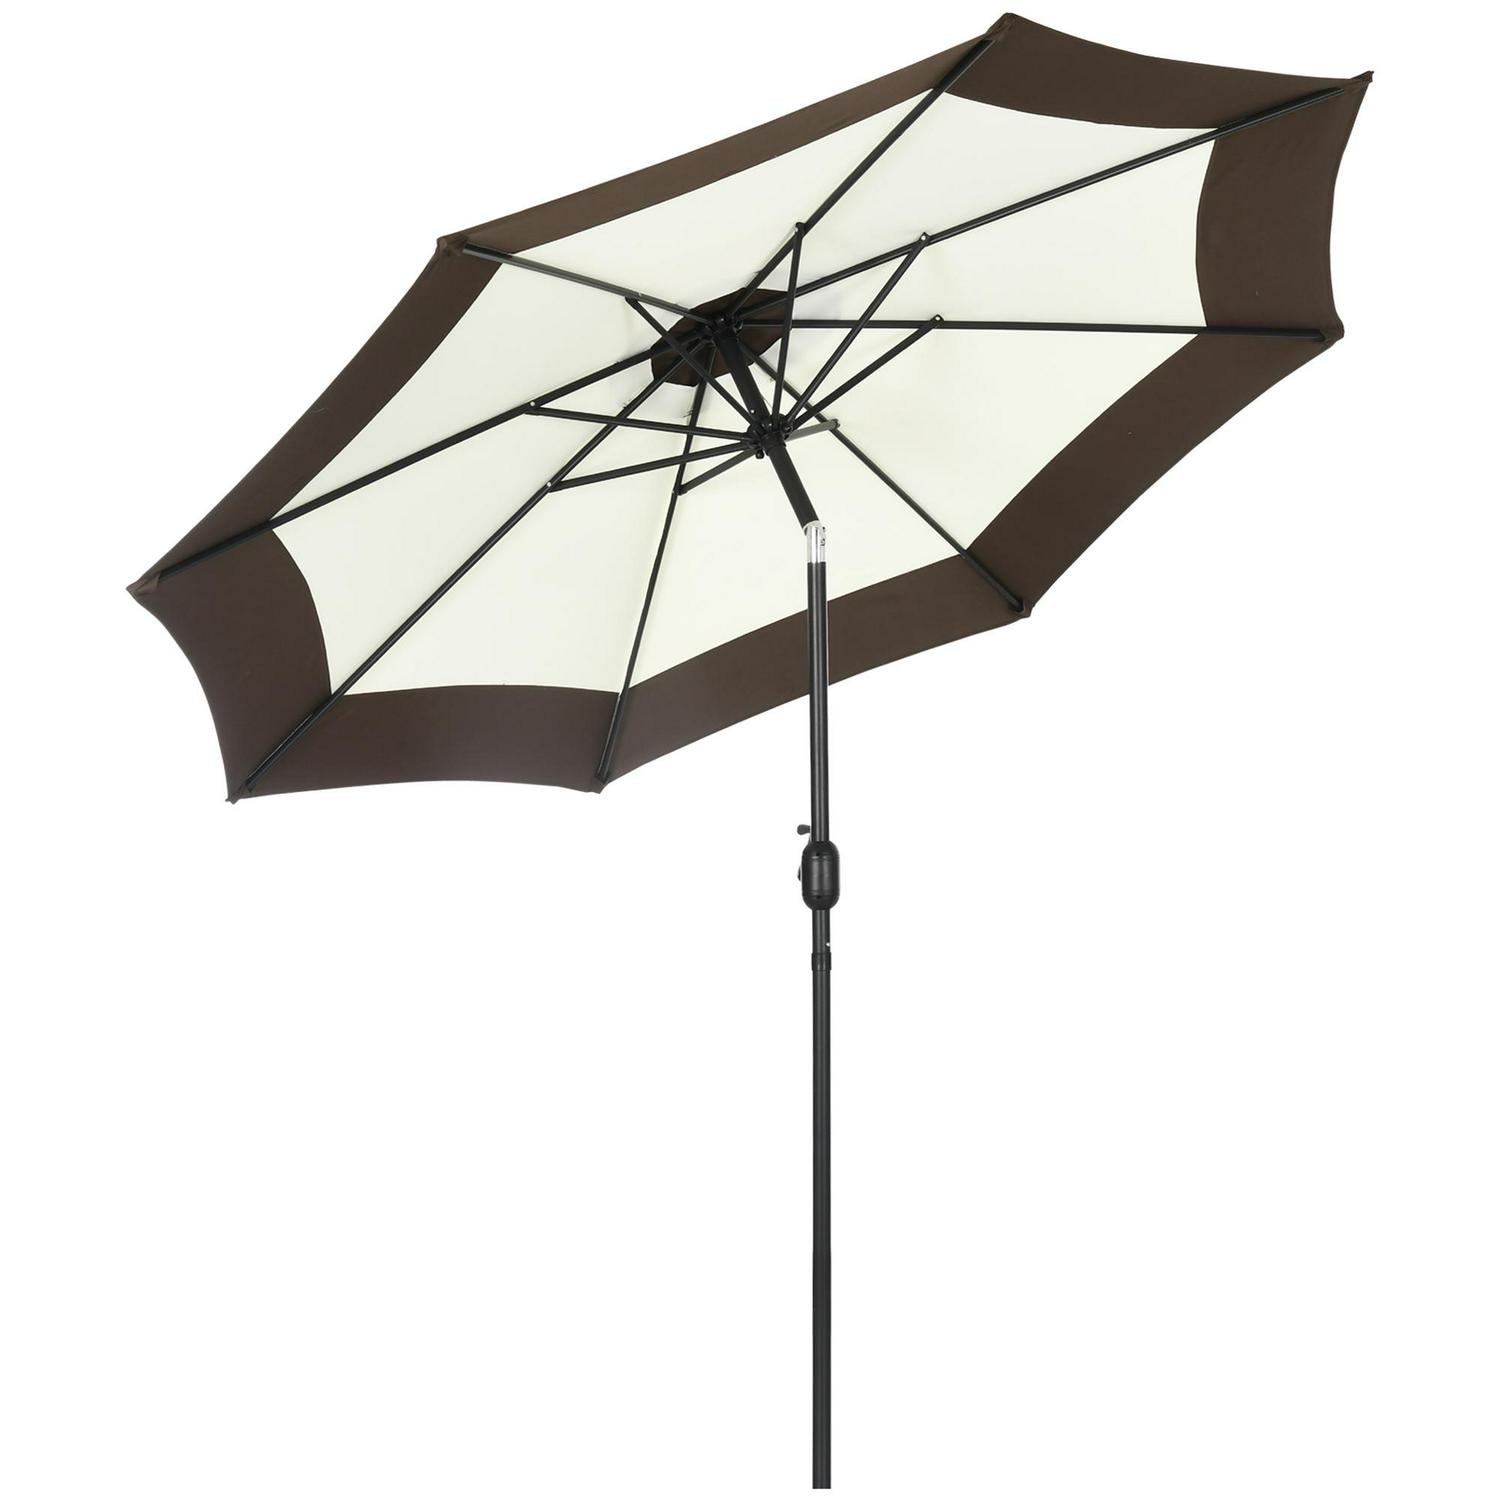 Garden Parasol Umbrella With 8 Metal Ribs- Coffee